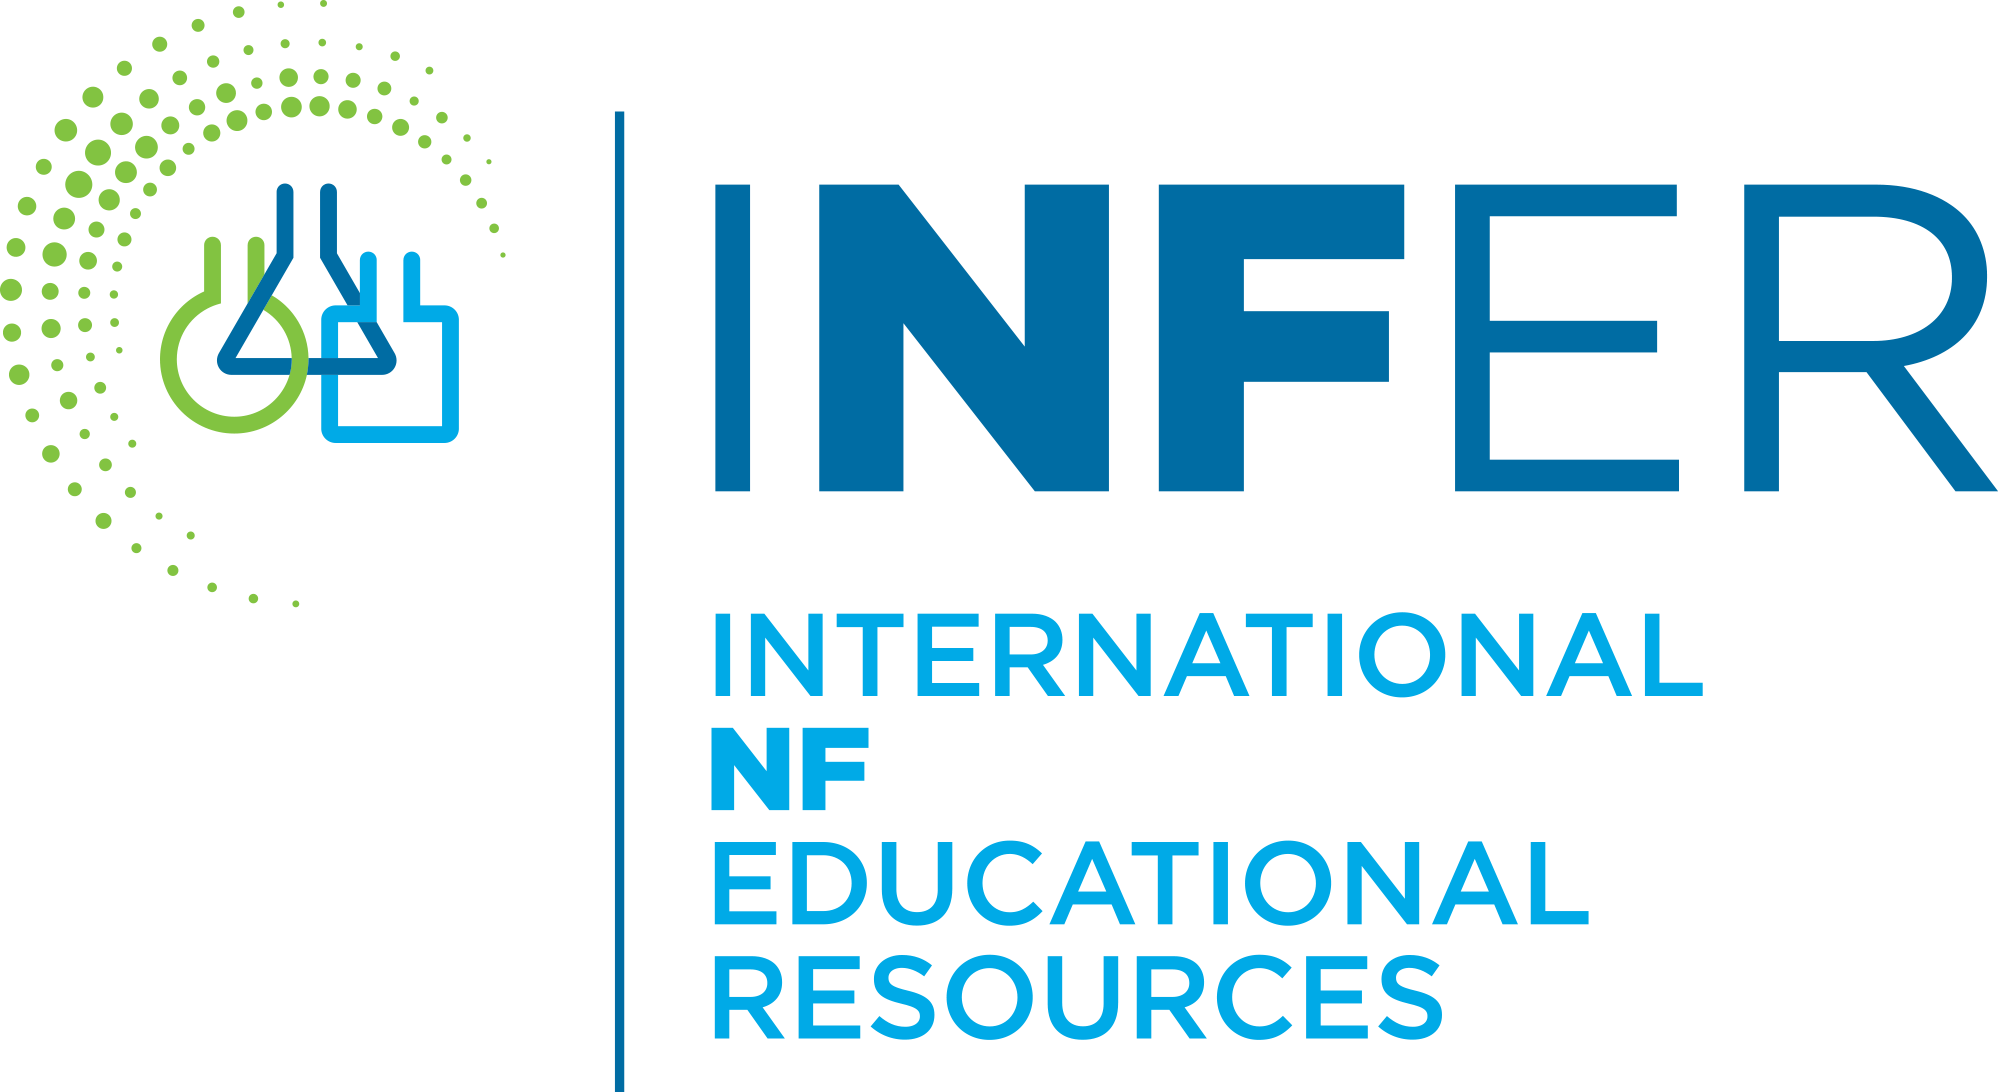 International nfe educational resources logo.